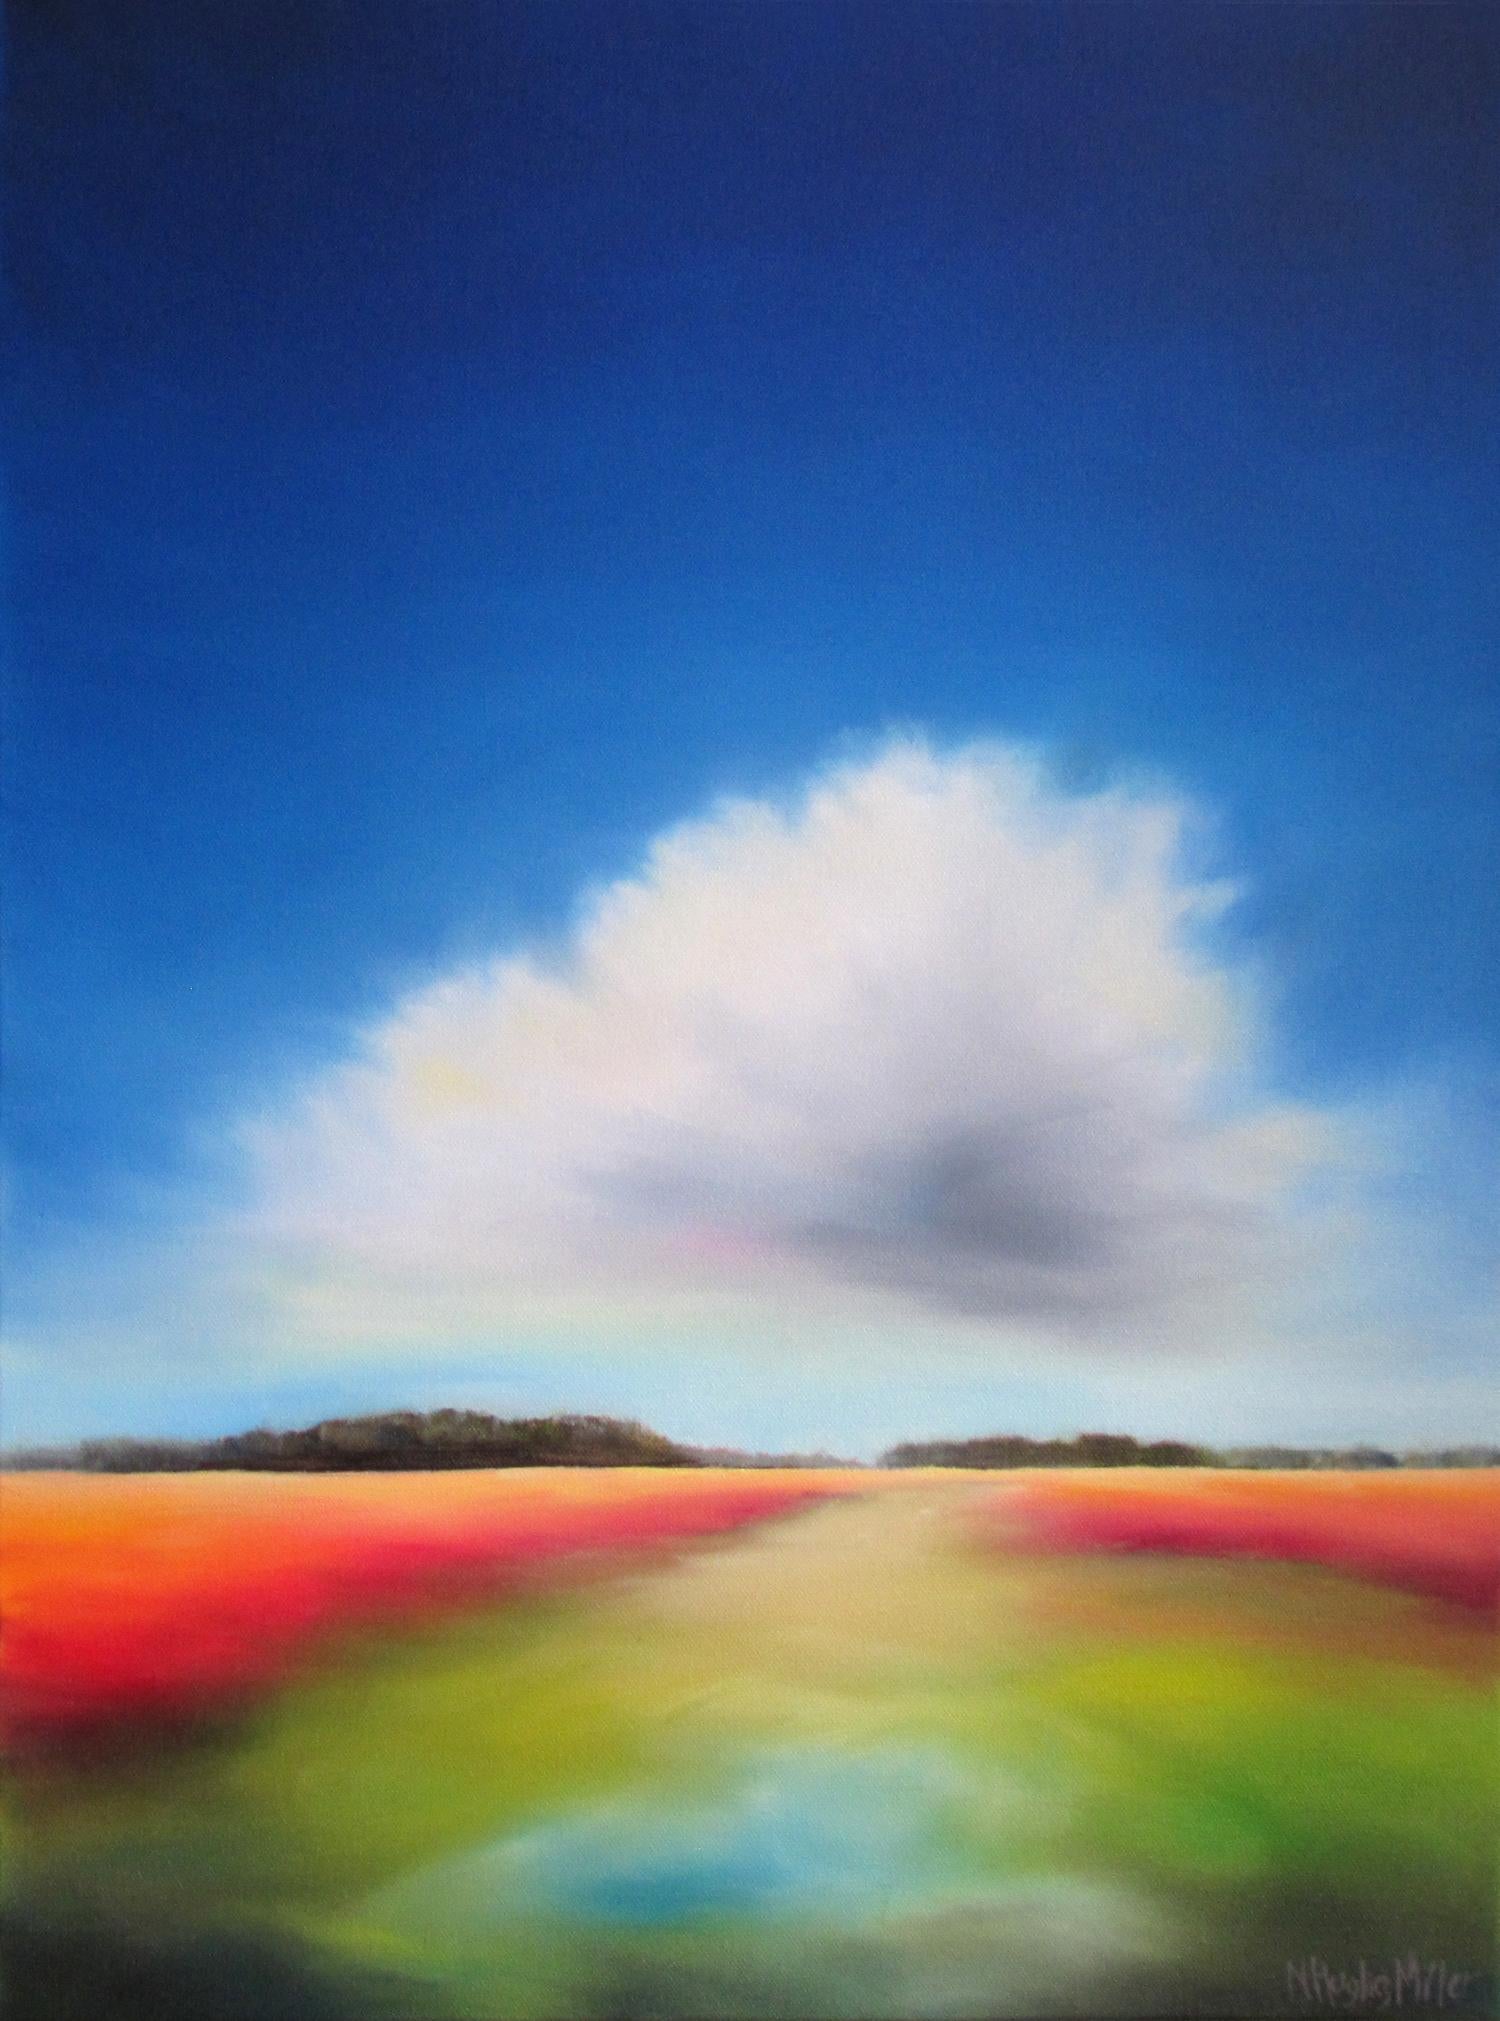 Cloud Over Field - Art by Nancy Hughes Miller